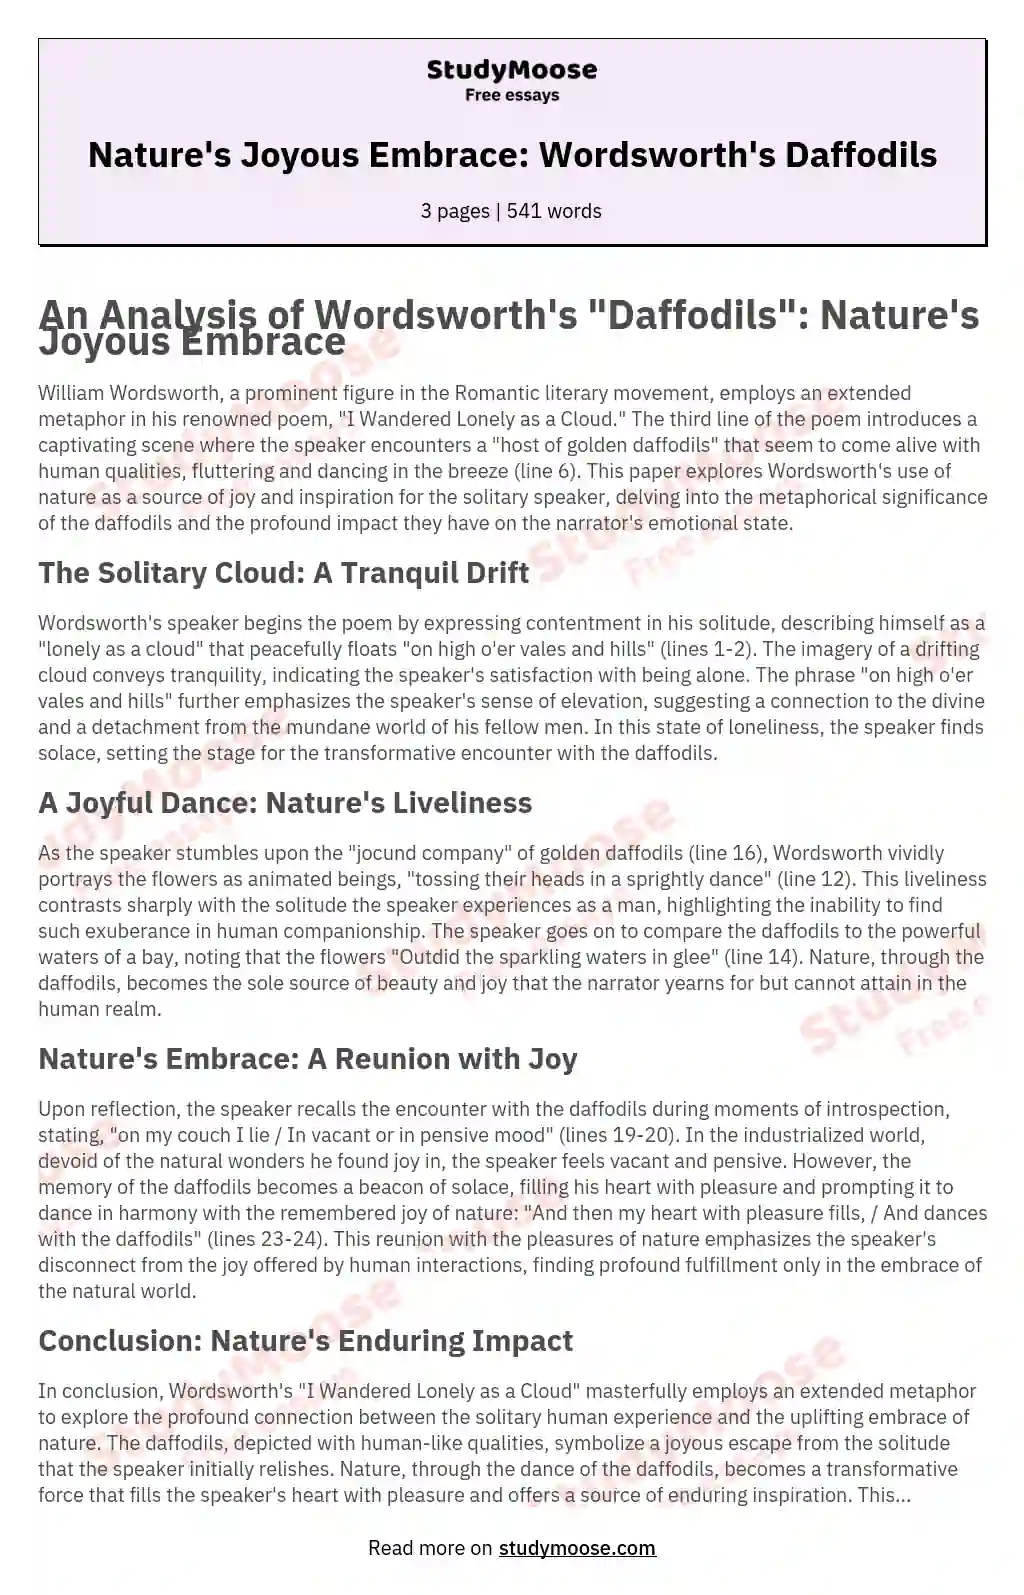 Nature's Joyous Embrace: Wordsworth's Daffodils essay